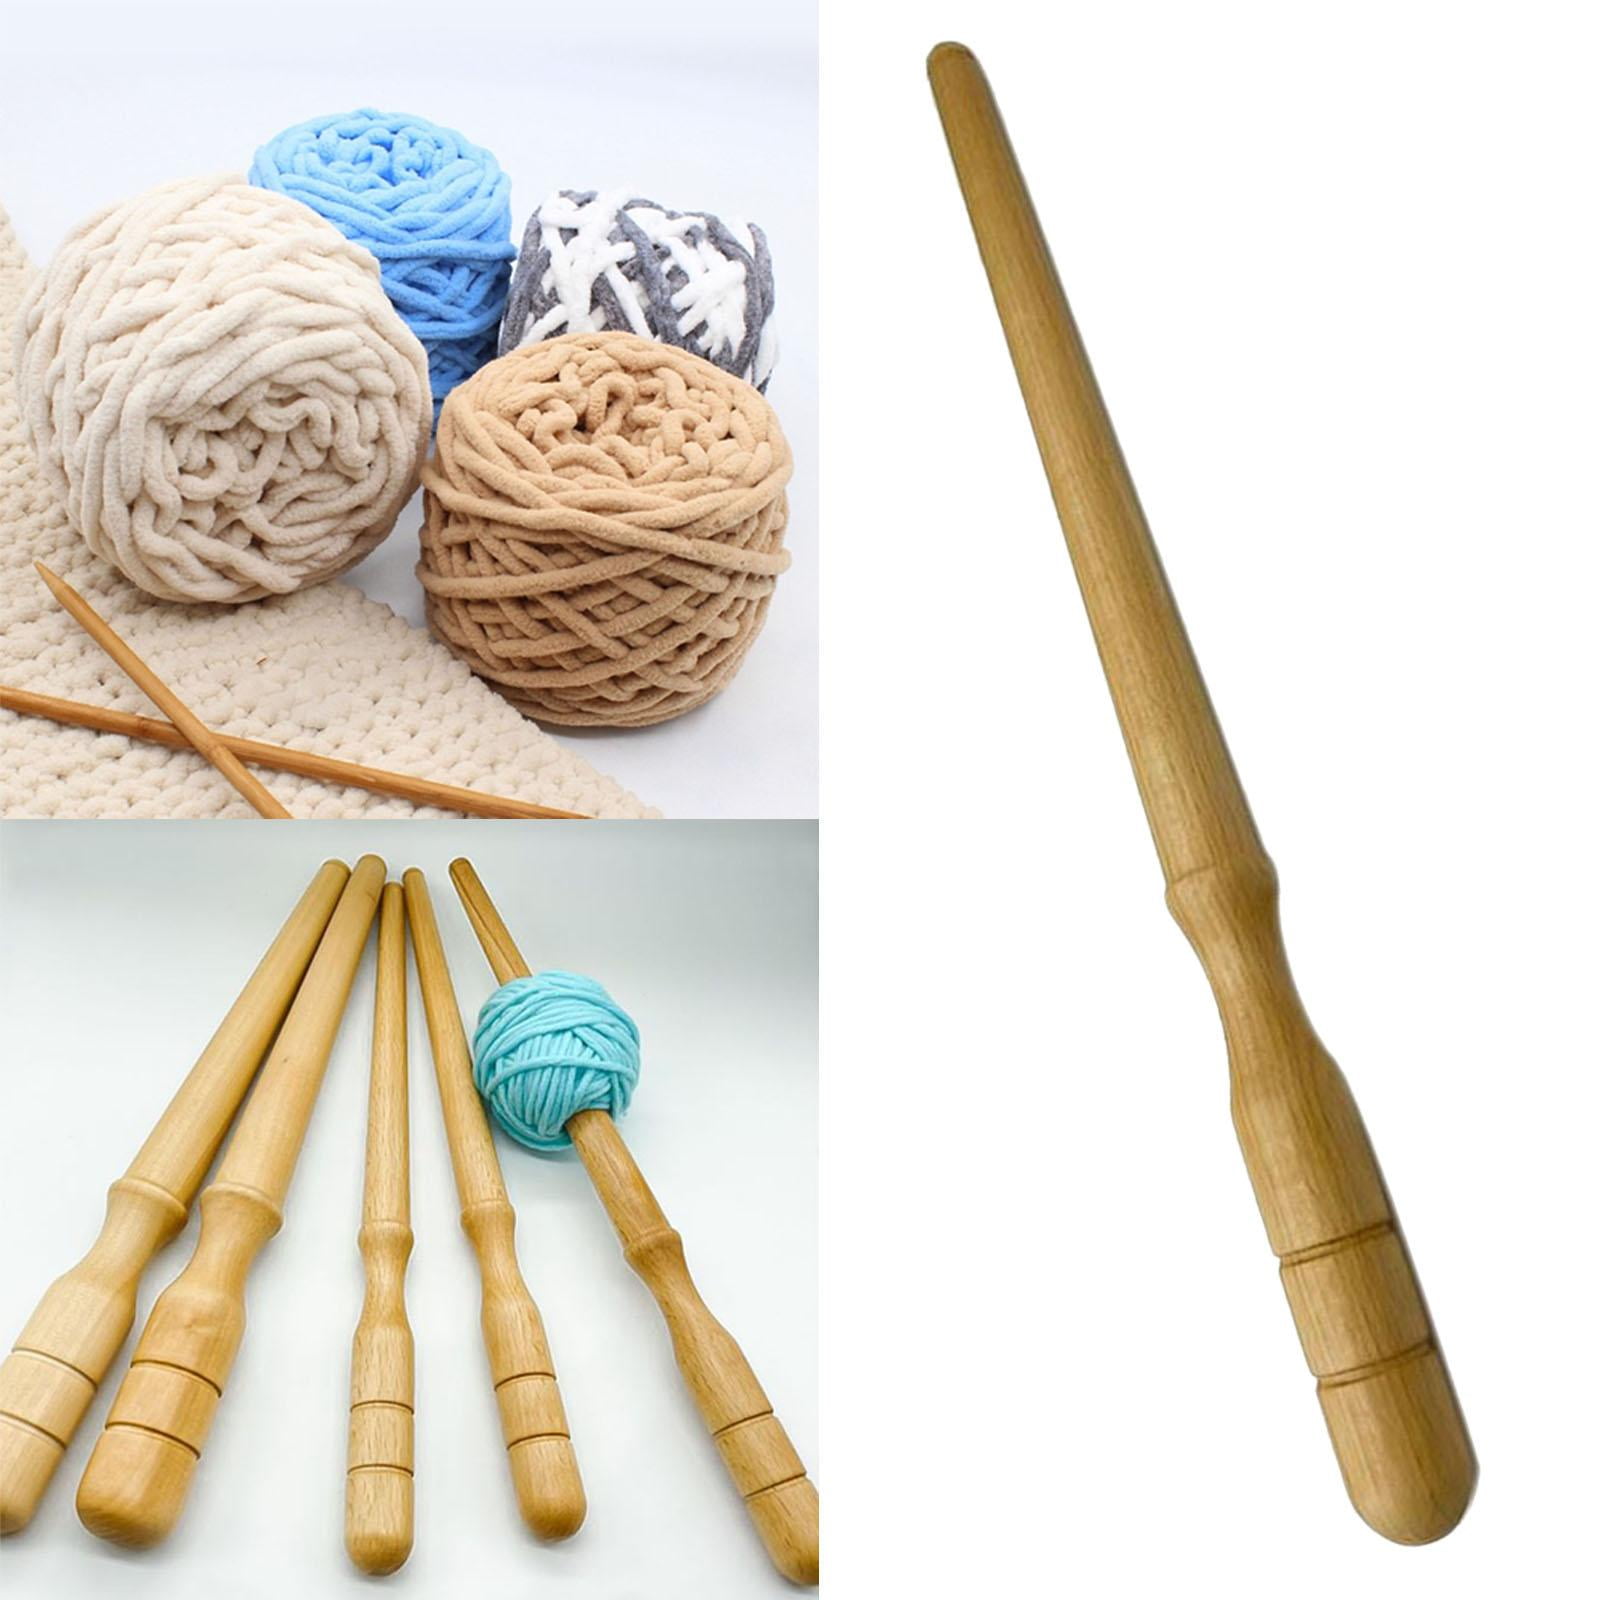 2023 Yarn Holder For Knitting Crocheting Rotating Magnetic Wooden Yarn  Holder Space Saving Yarn Holder For Knitting 320g Bearing - AliExpress